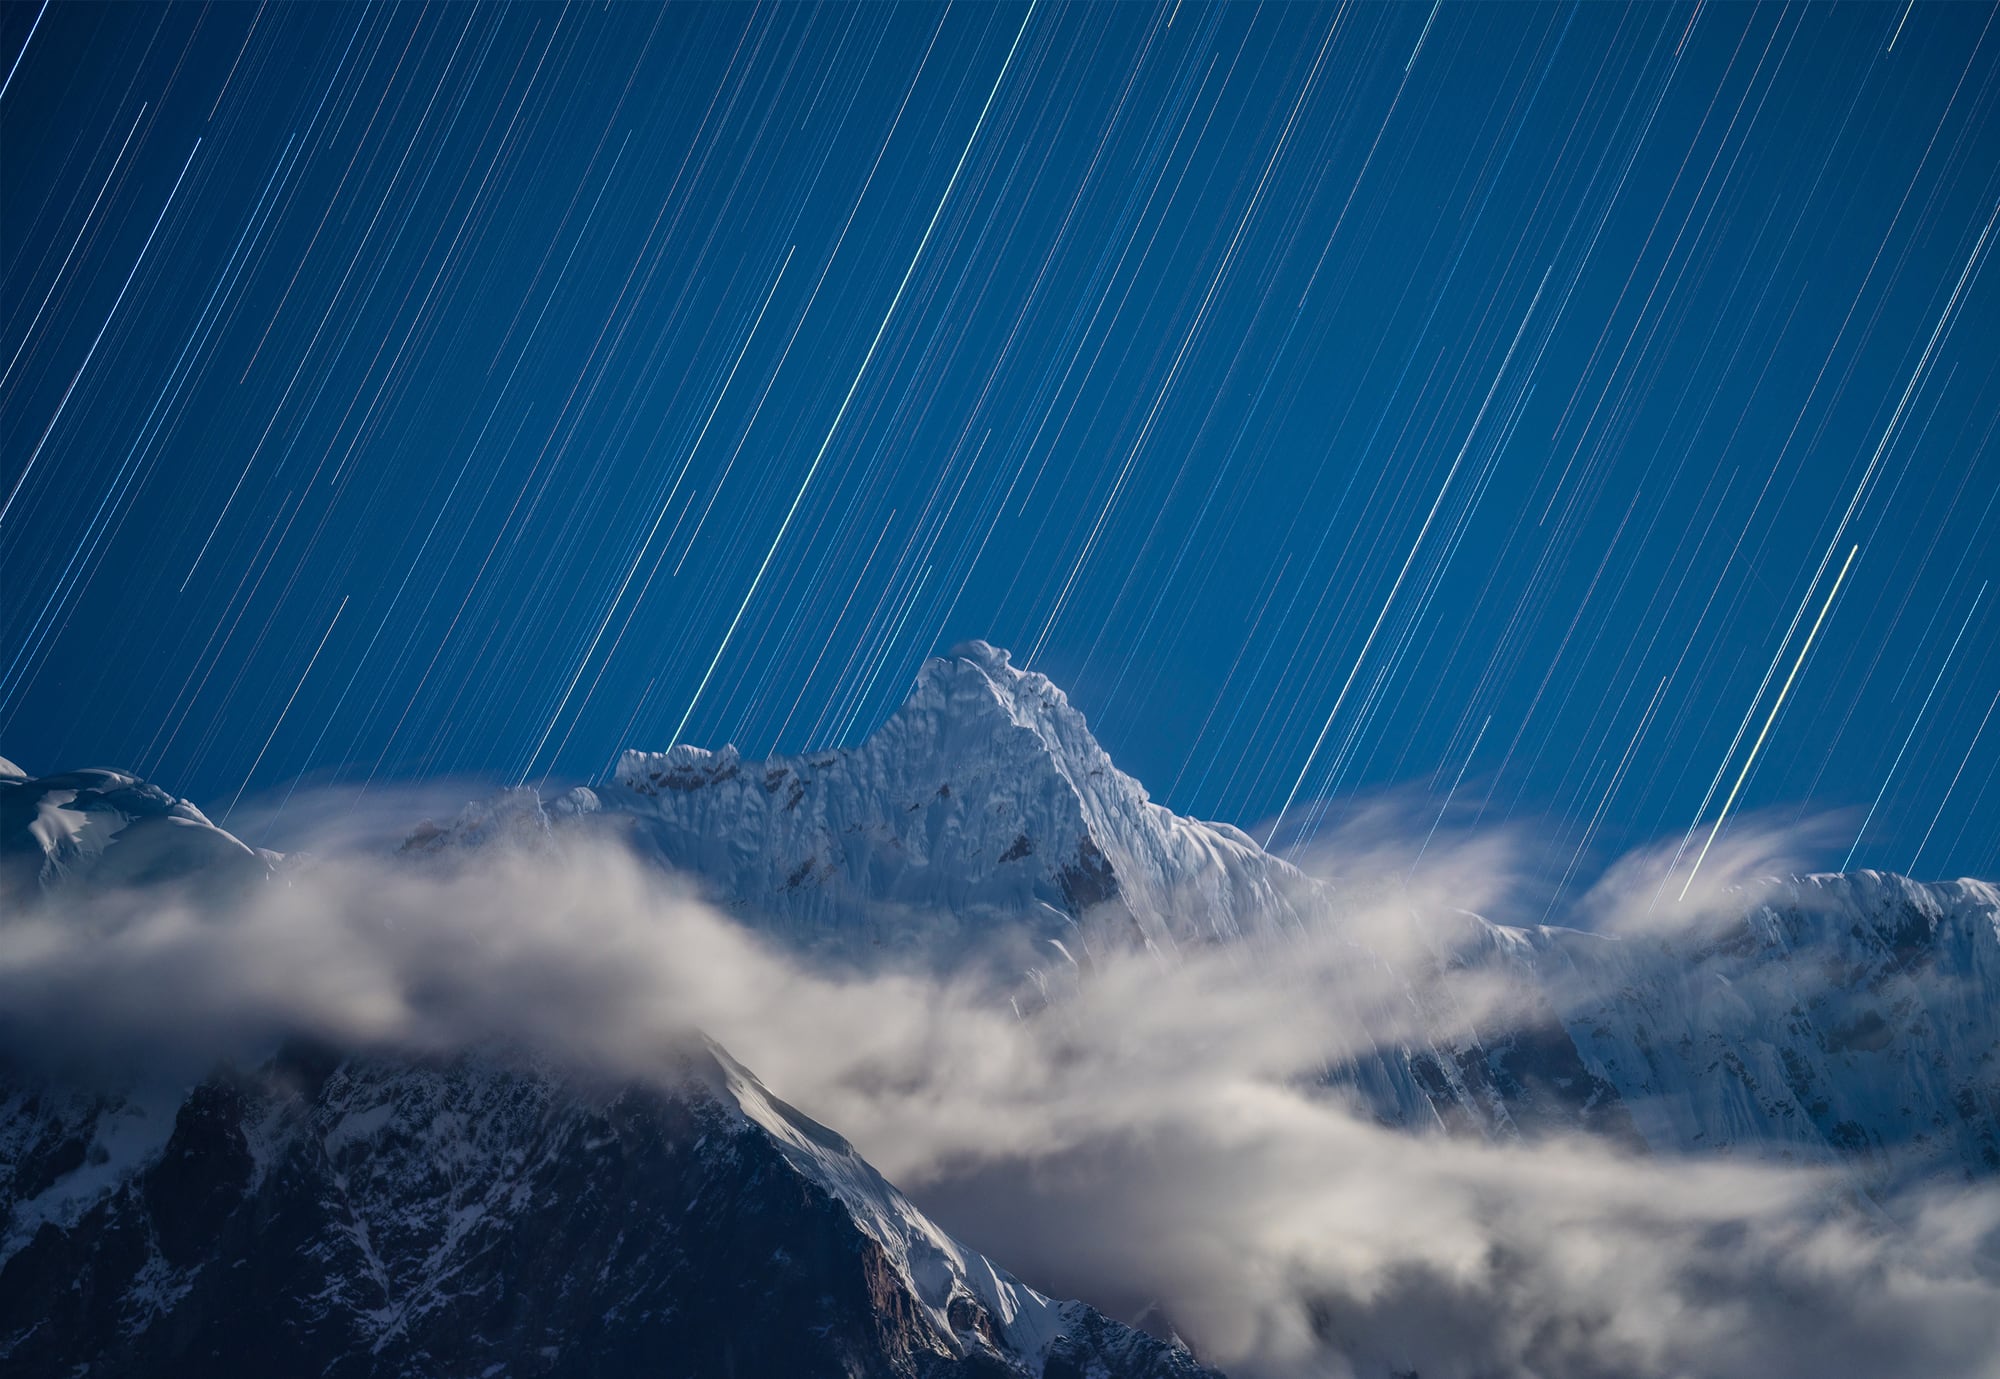 General 2000x1379 photography night nature landscape stars long exposure light trails mountains snowy mountain clouds Zihui Hu Tibet Himalayas